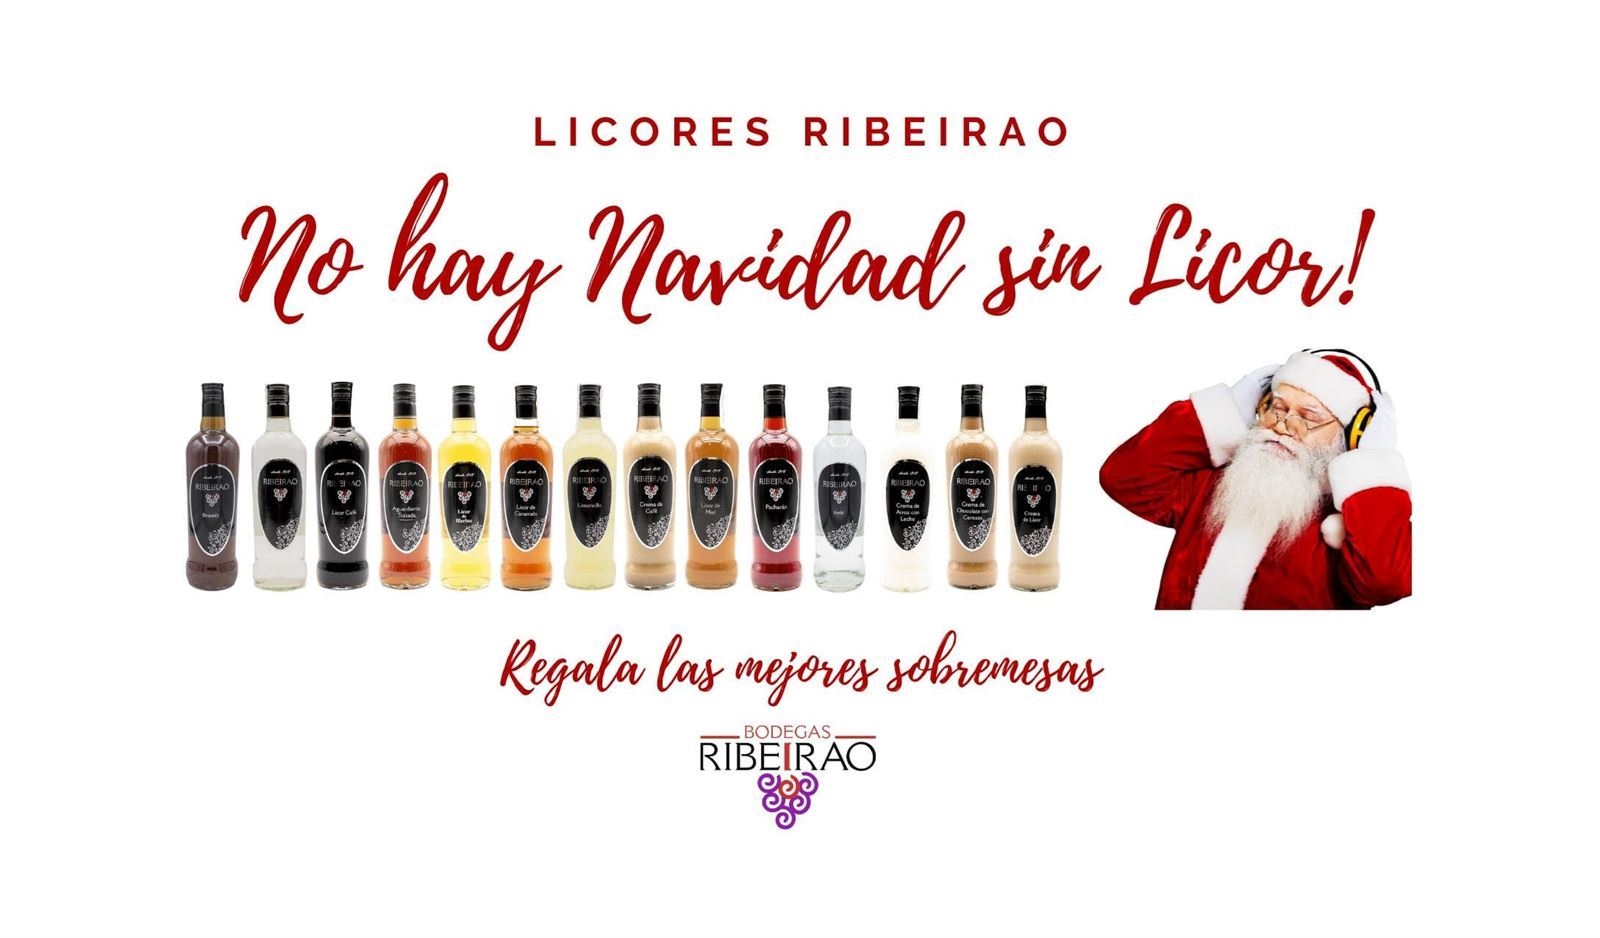 LOS LICORES RIBEIRAO